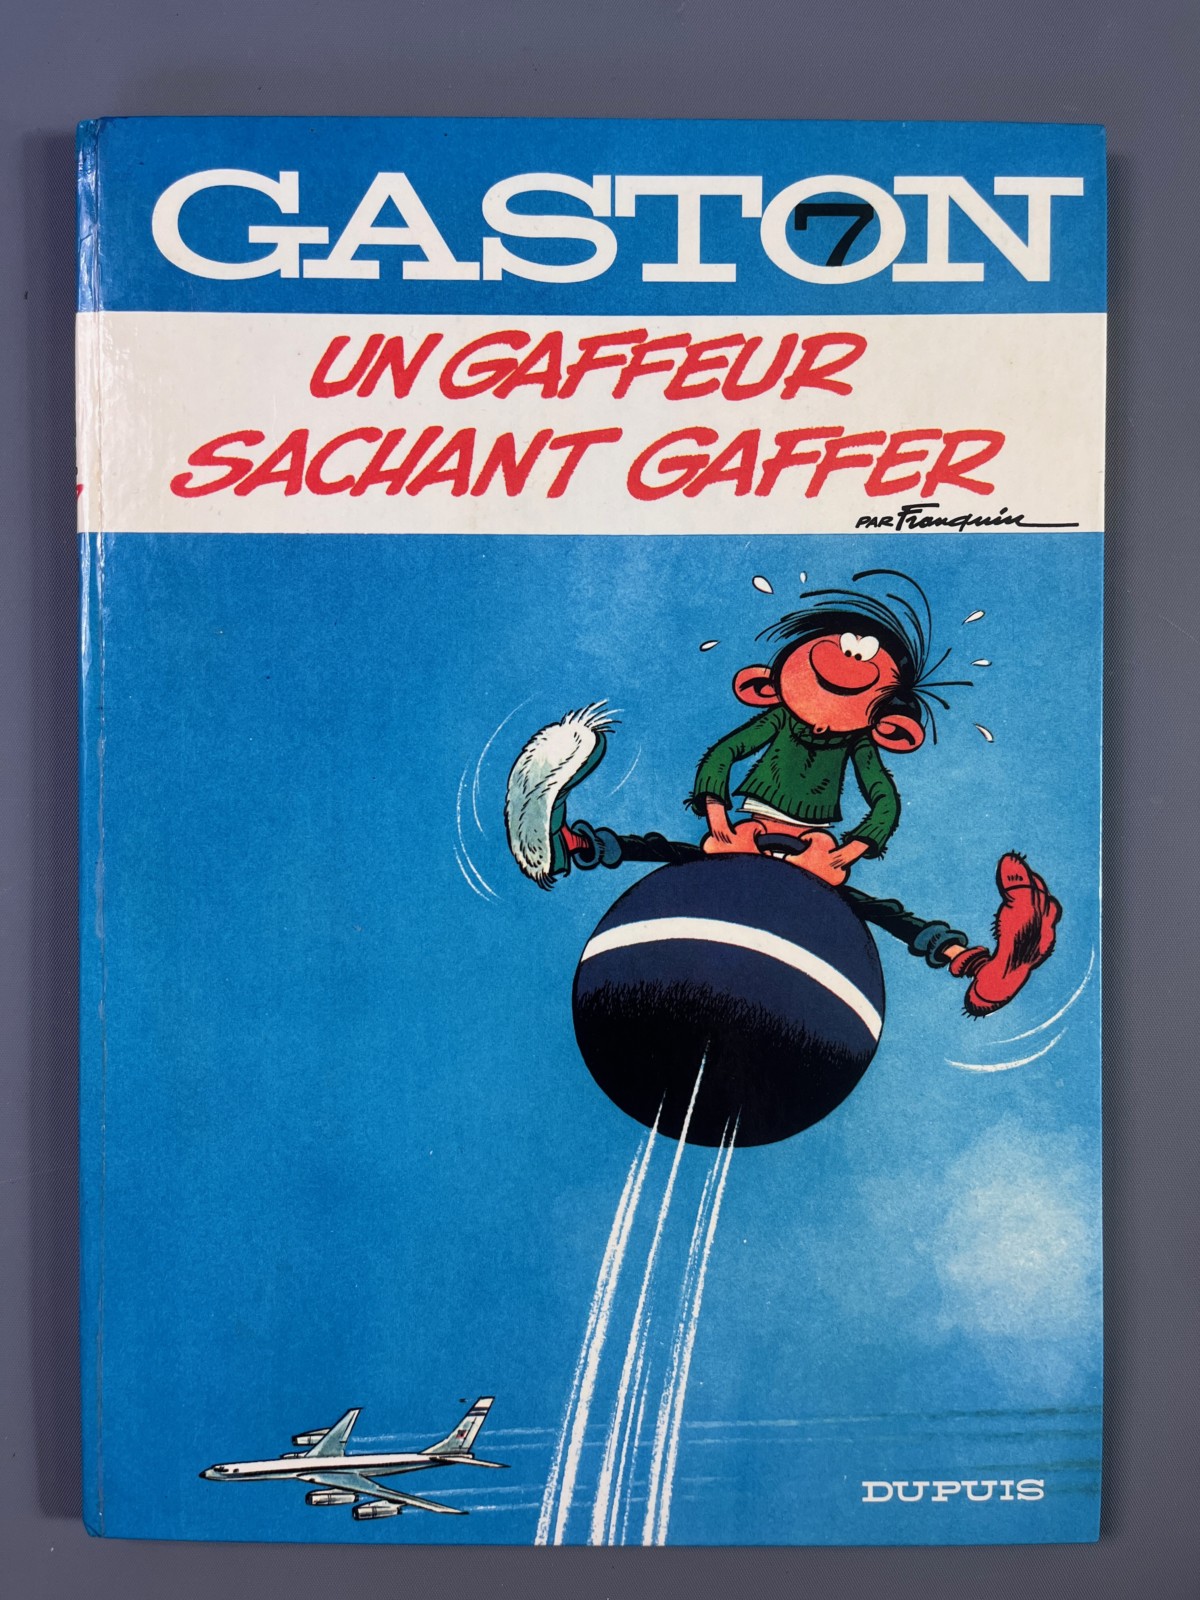 Franquin, Gaston Lagaffe, Un gaffeur sachant gaffer, EO, 1969